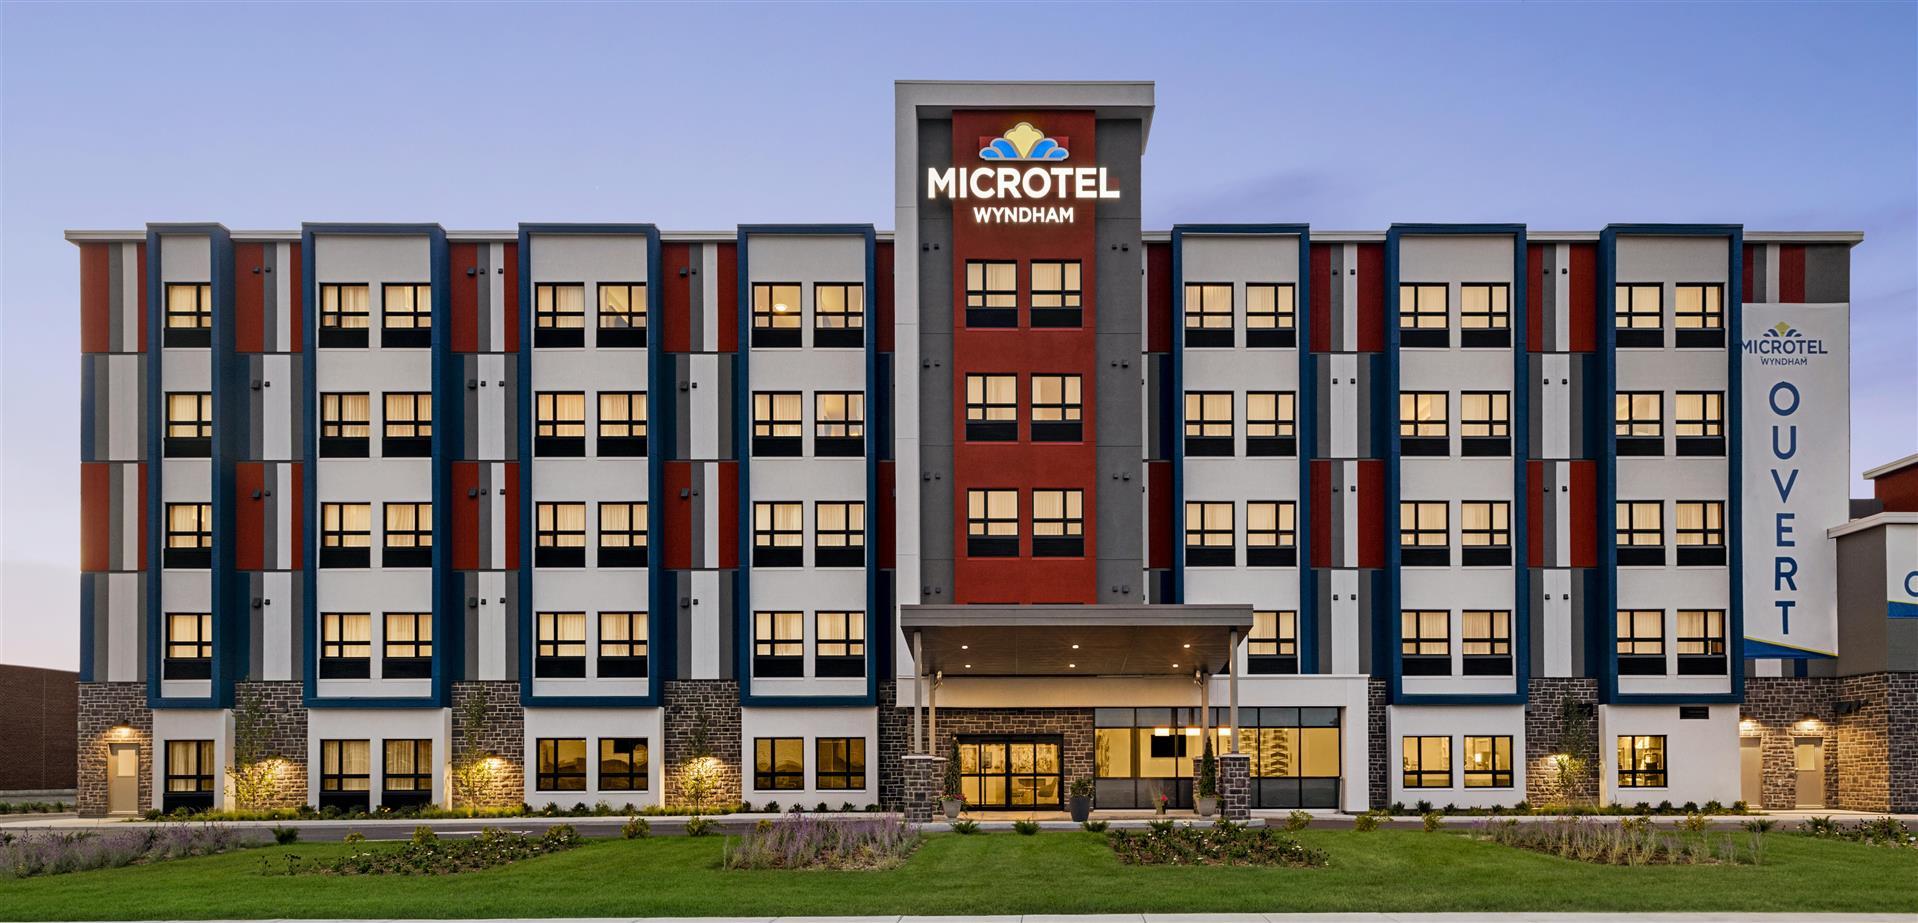 Microtel Inn & Suites by Wyndham Dorval in Dorval, QC